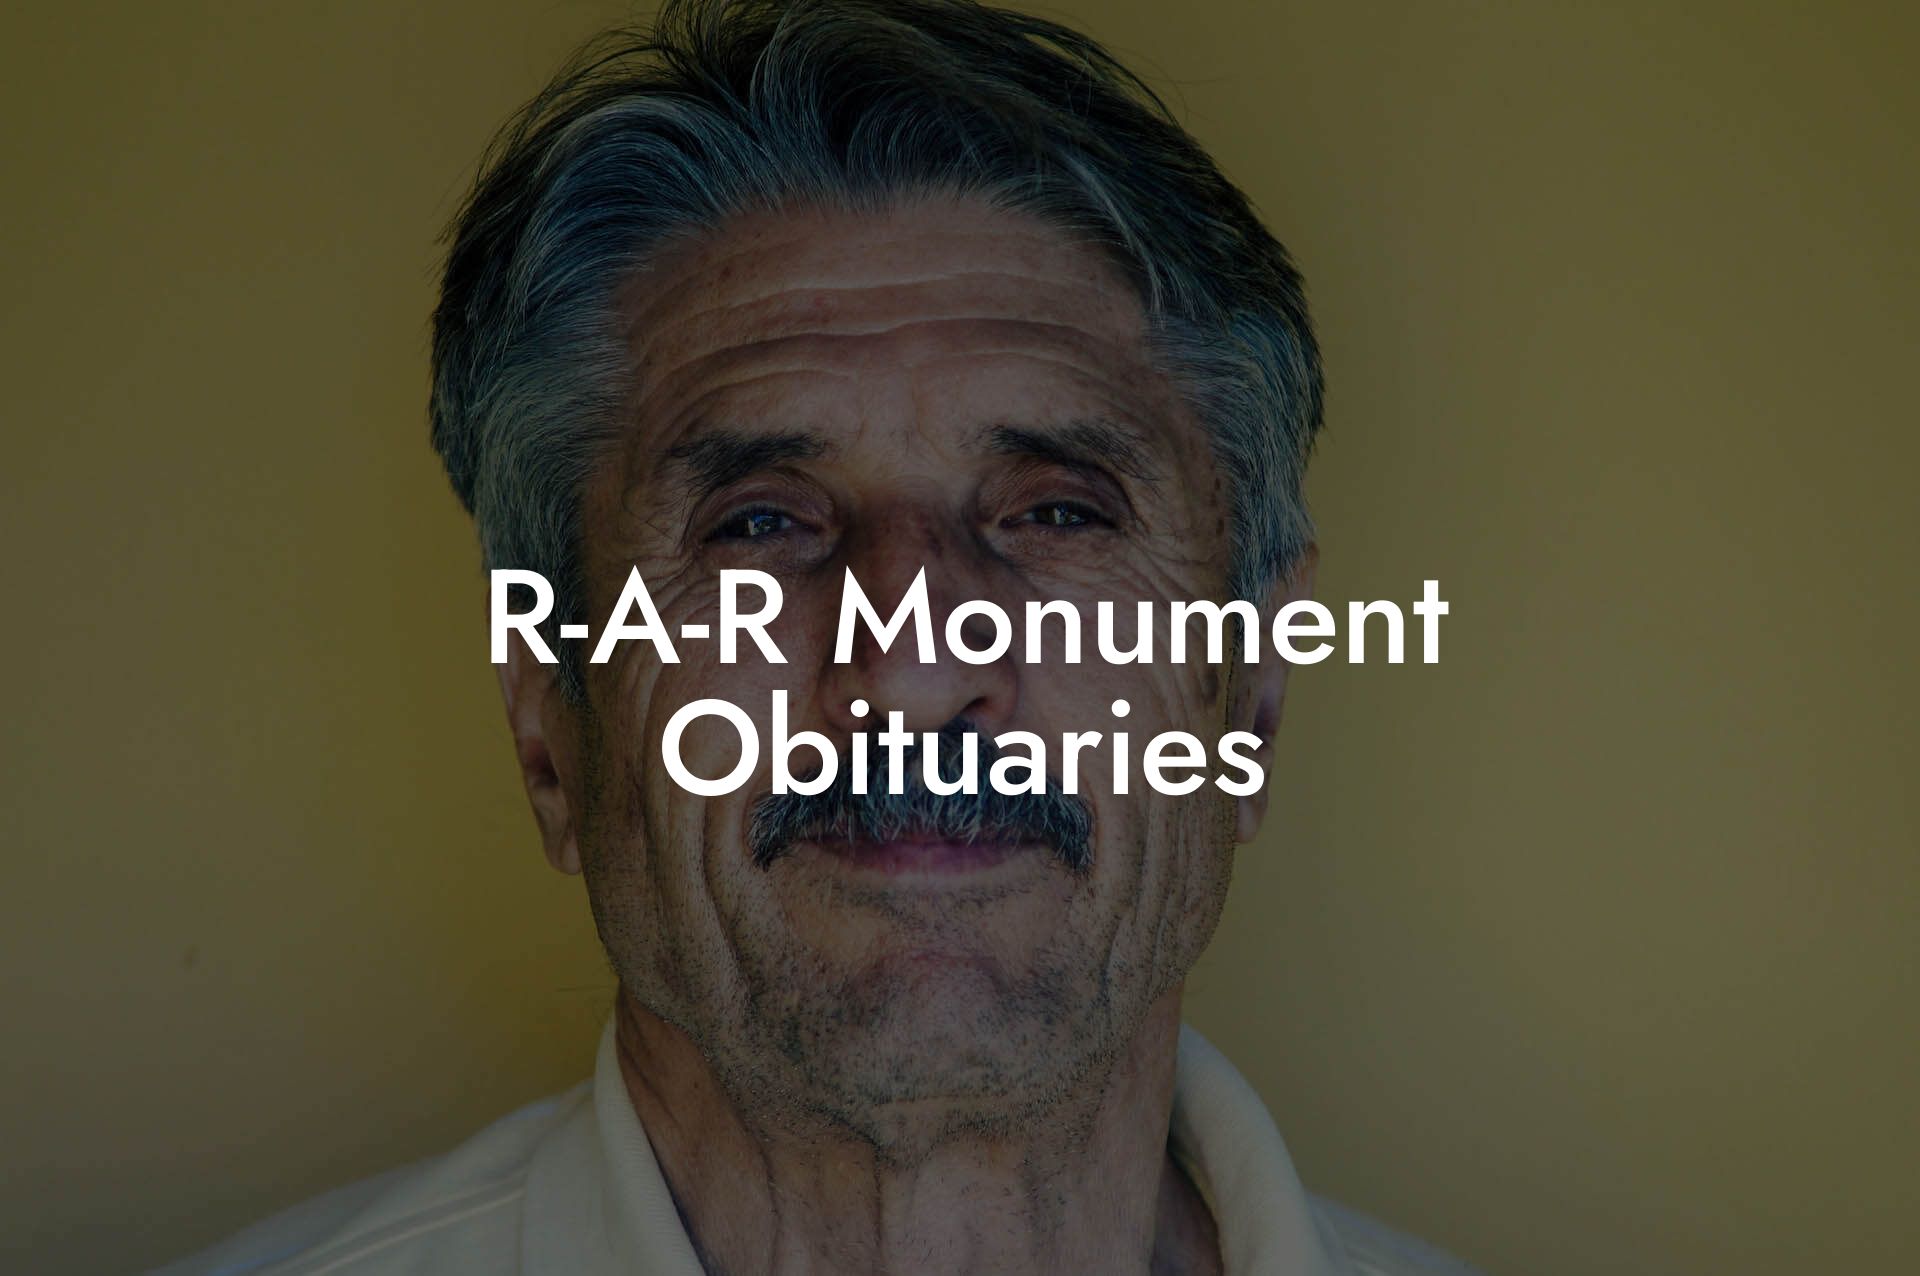 R-A-R Monument Obituaries